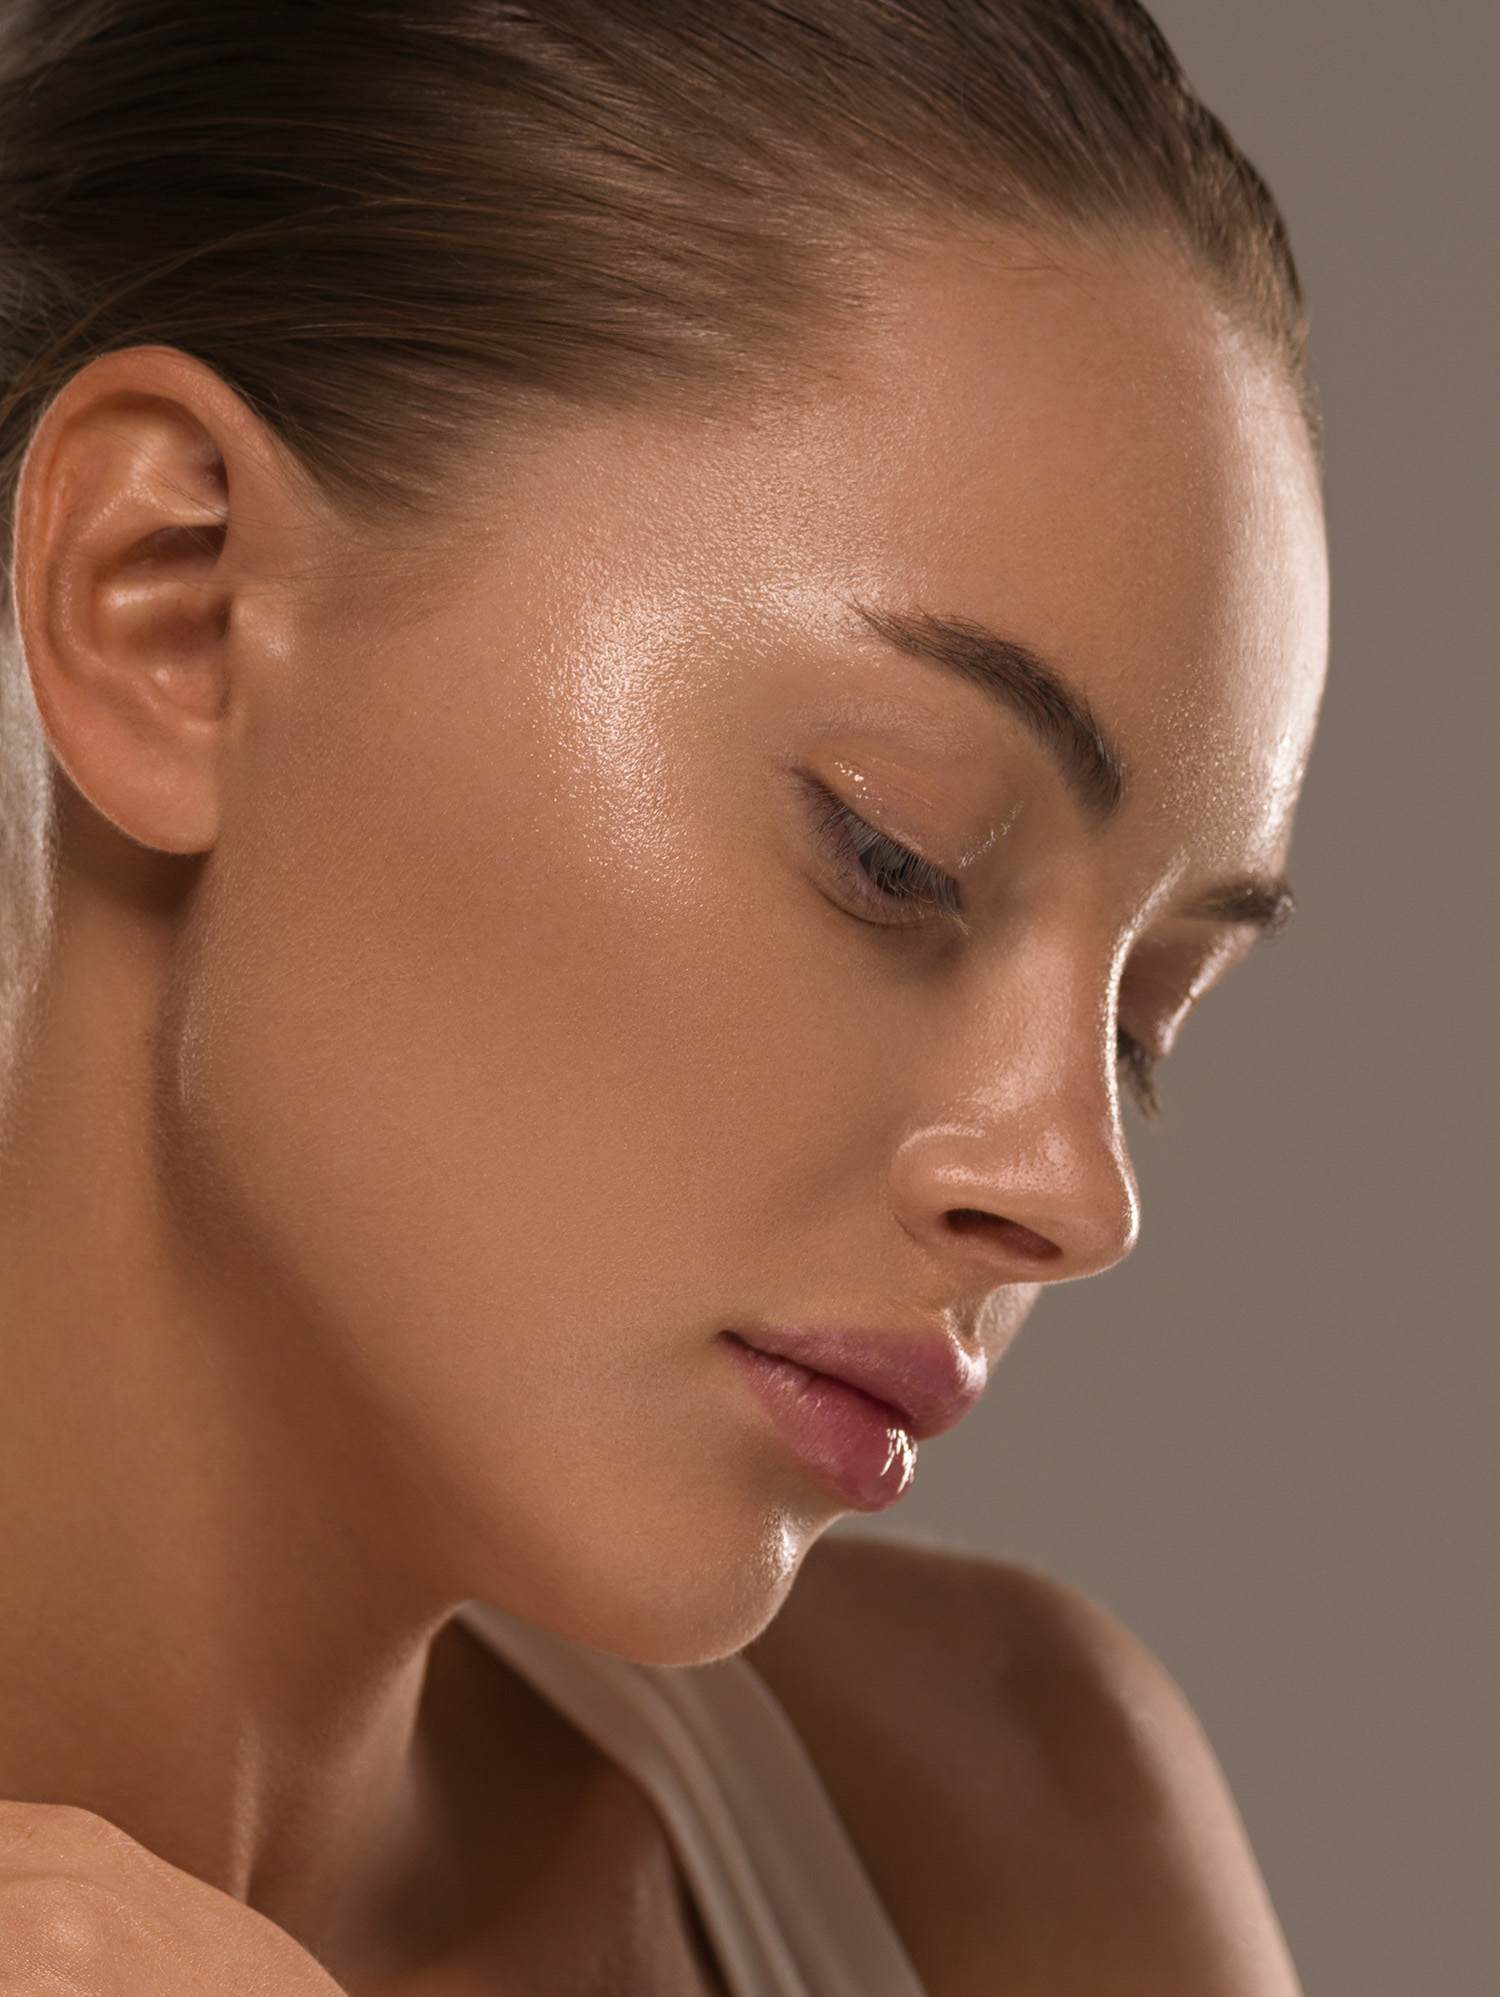 Woman beauty healthy skin moisture spa face